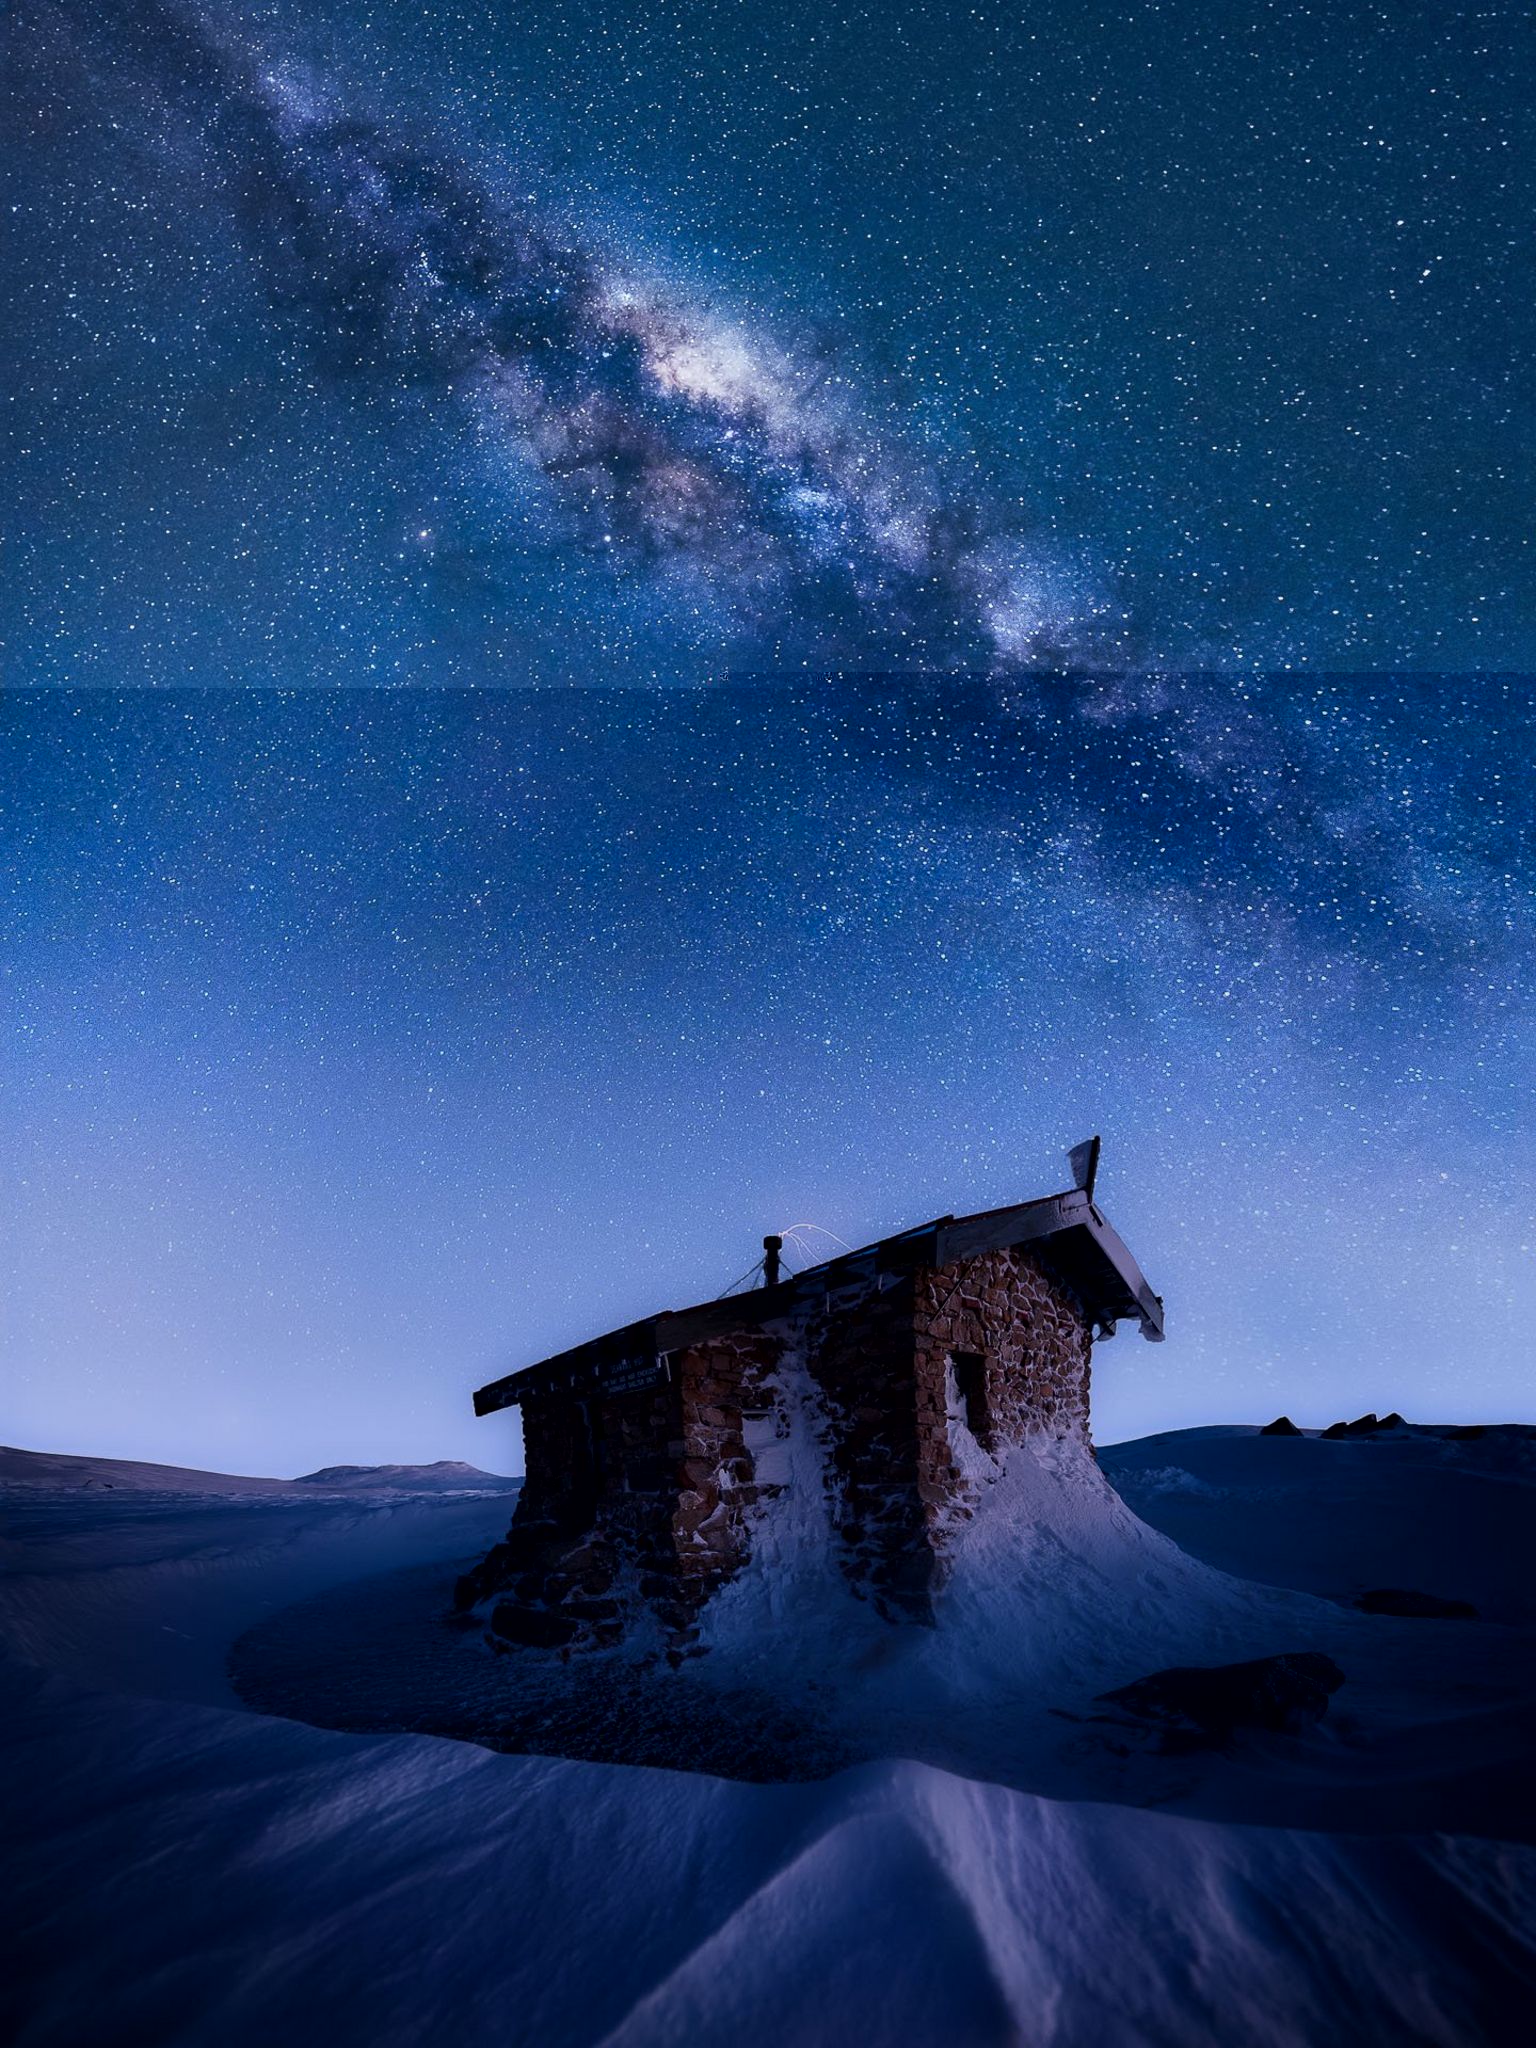 The Milky Way over and observation hut on Mount Kosciuszko in Australia.